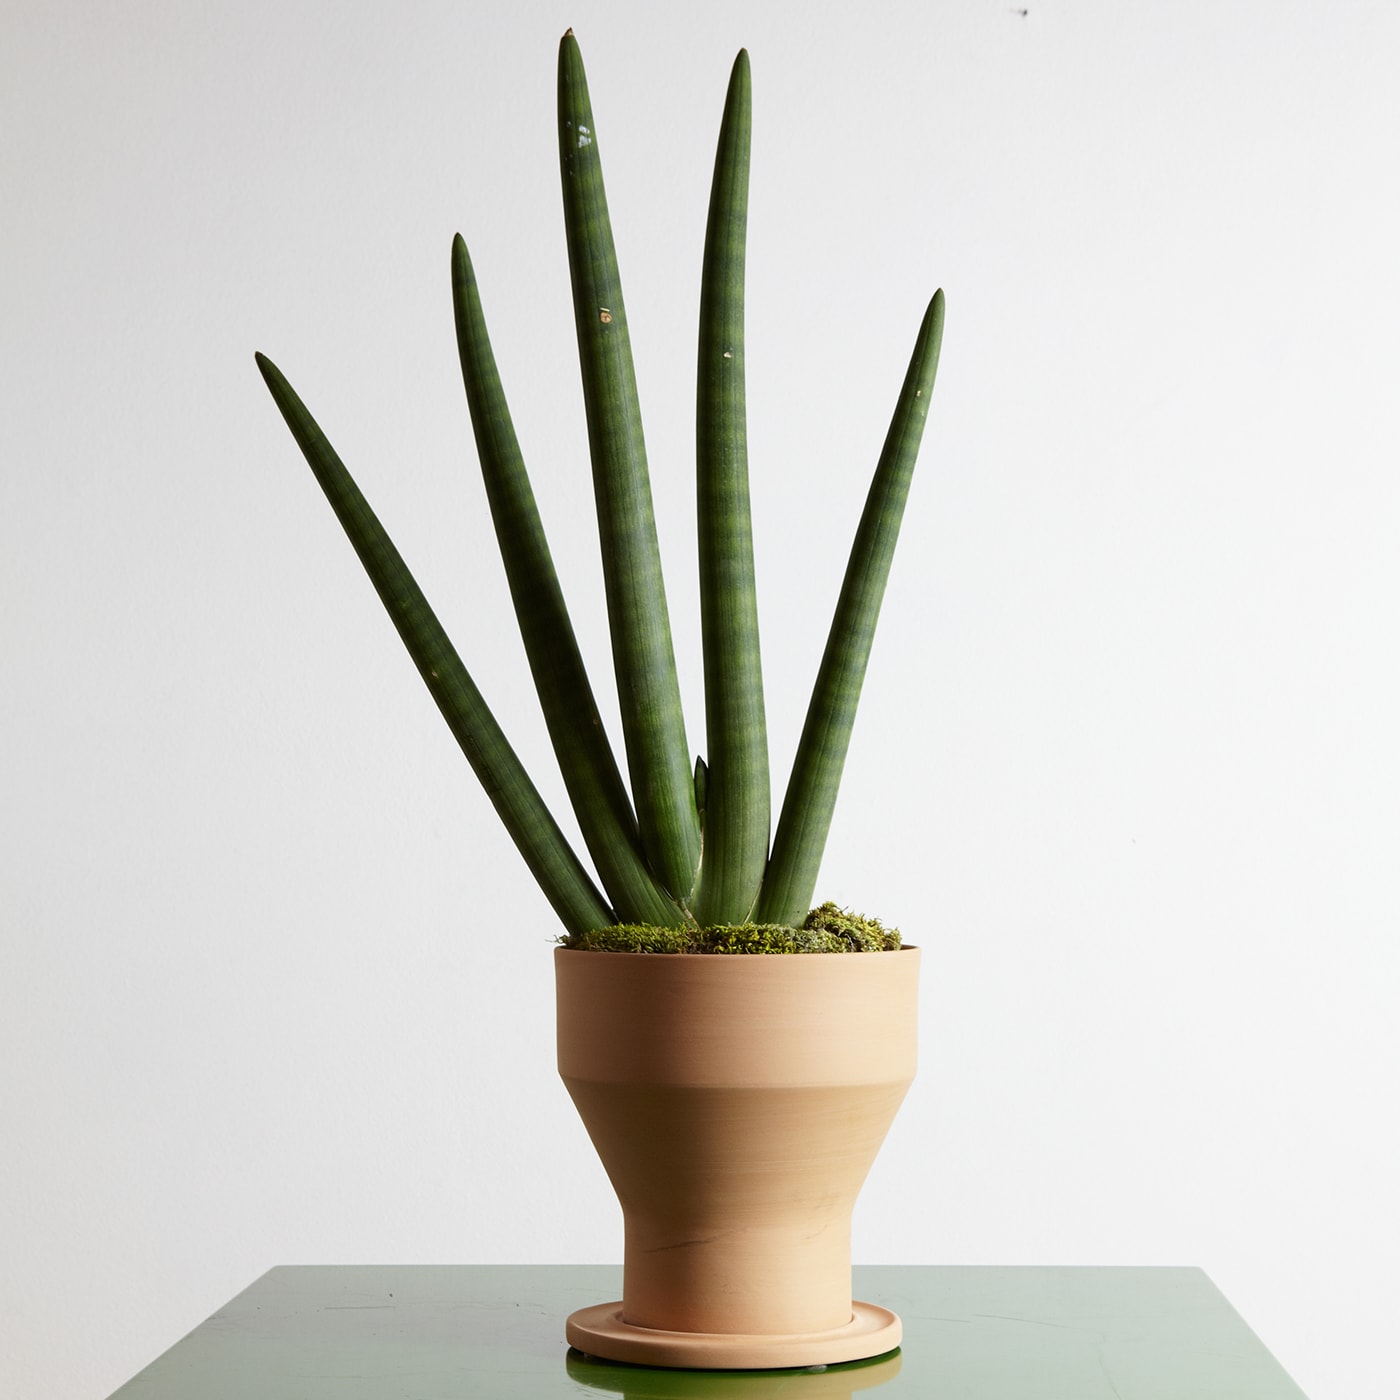 Erba Set of Terracotta Vase and Plant Saucer - Internoitaliano